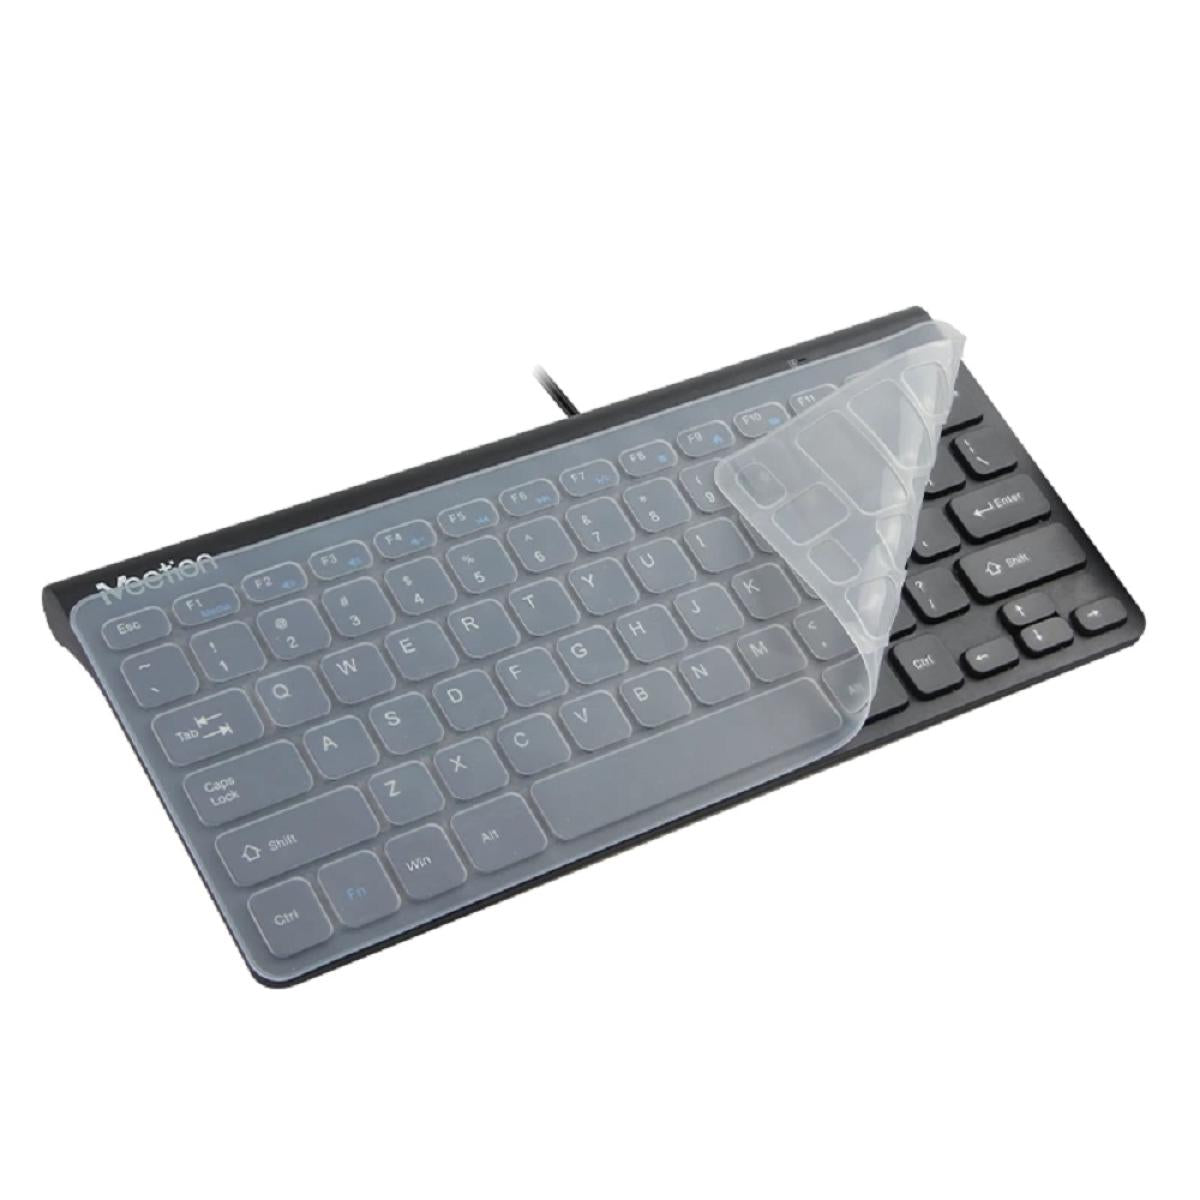 Meetion USB Mini Office Keyboard - Black